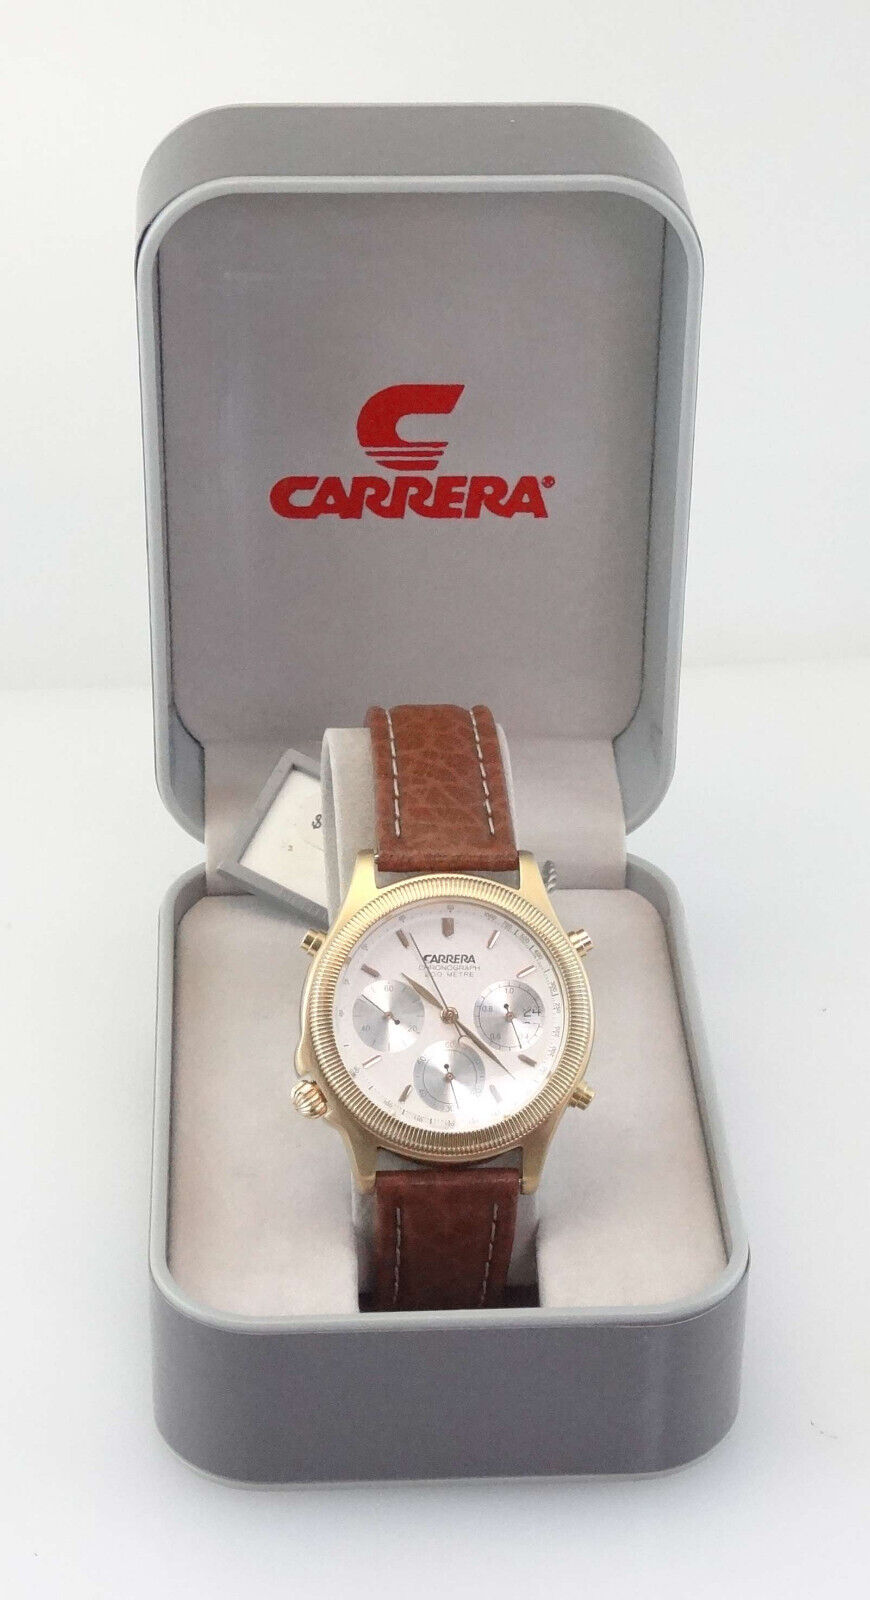 Carrera-7Axx-Clone-515.15-Gold-WhiteFace-LeatherStrap-eBay-Jan2023-2.jpg